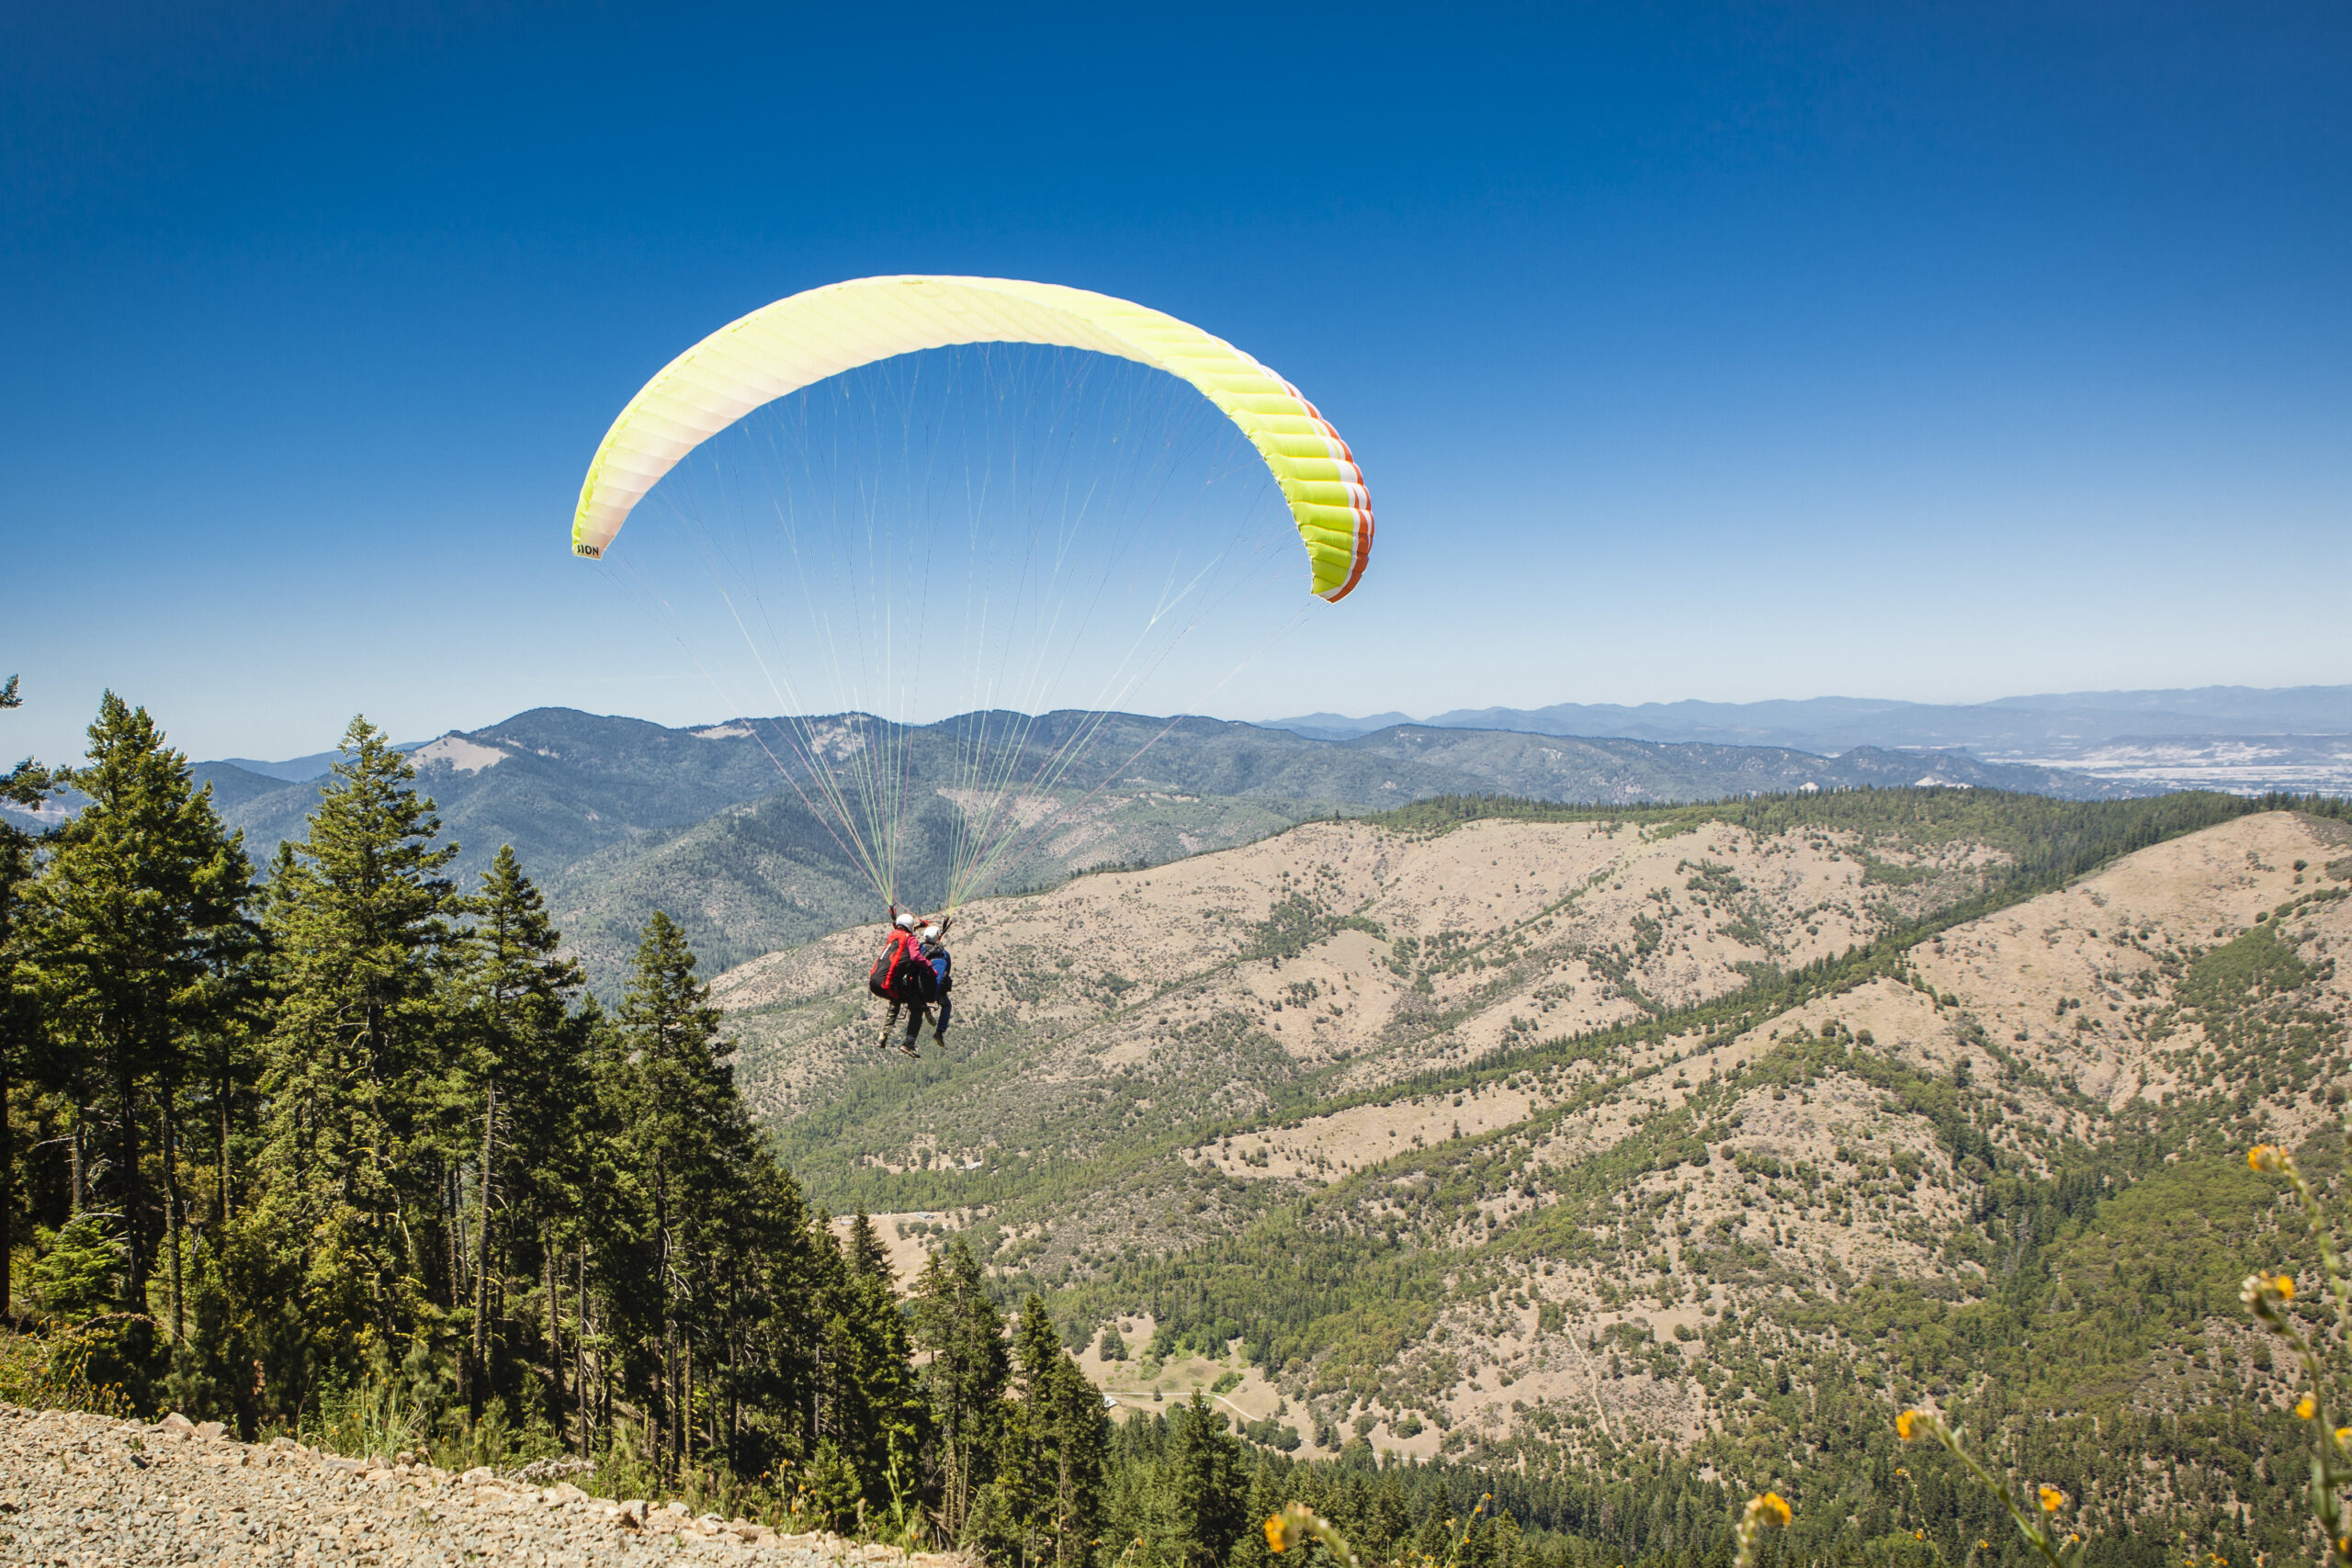 Southern Oregon vineyards have become popular landing spots for hang gliders